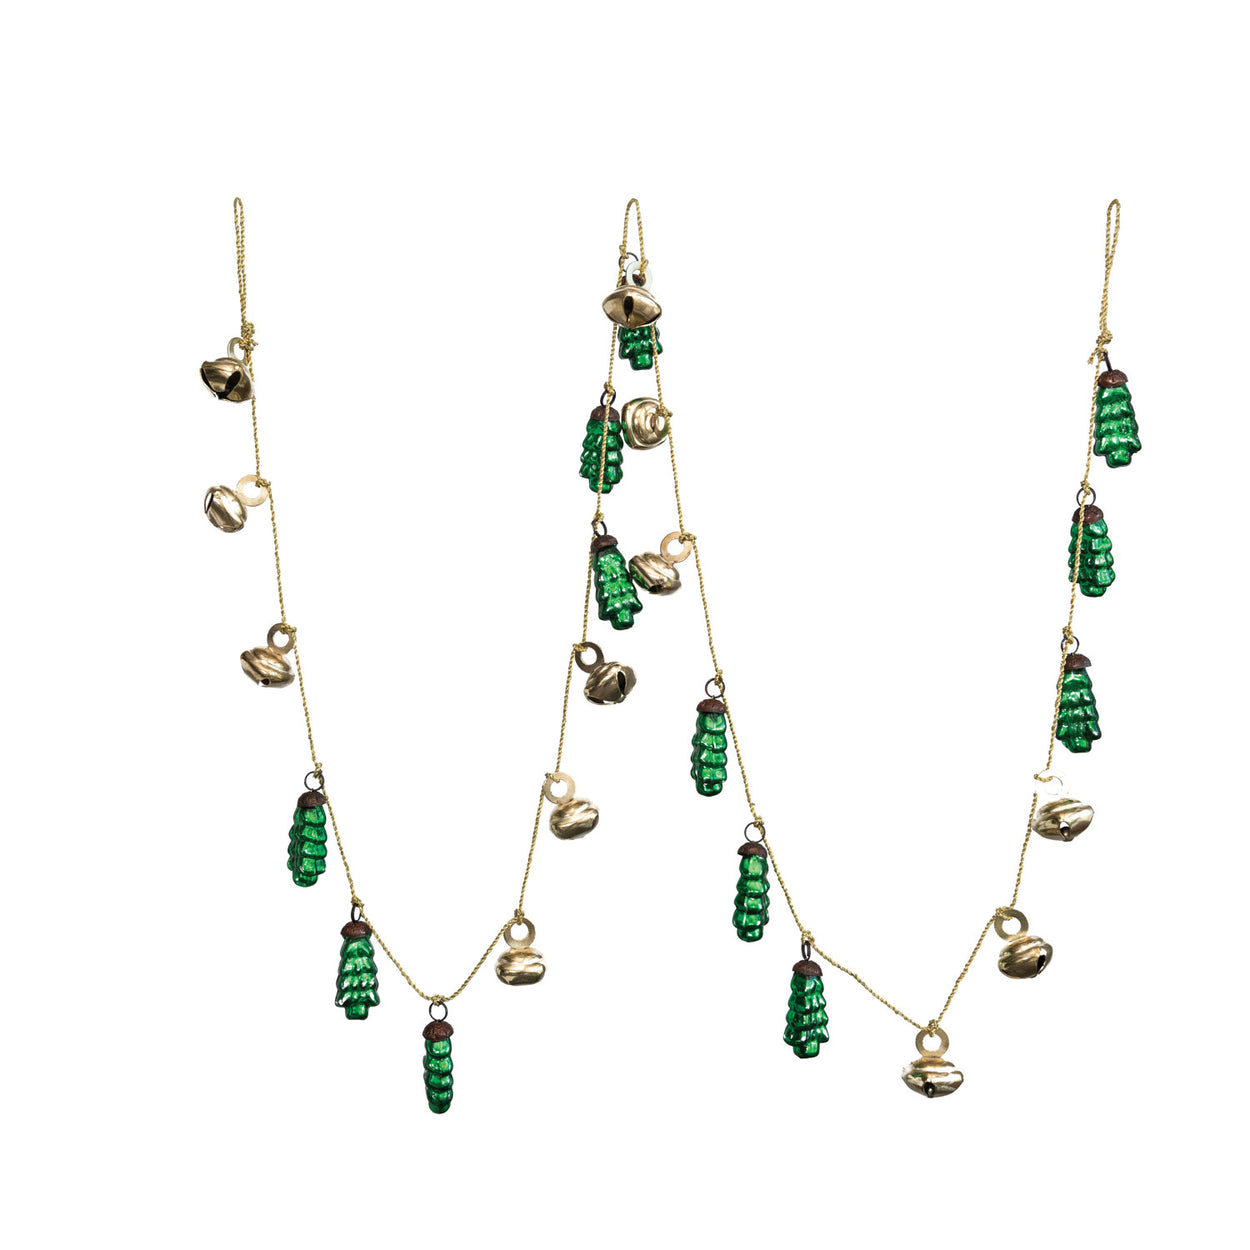 Green & Gold Mercury Glass Tree Ornament Garland With Metal Bells